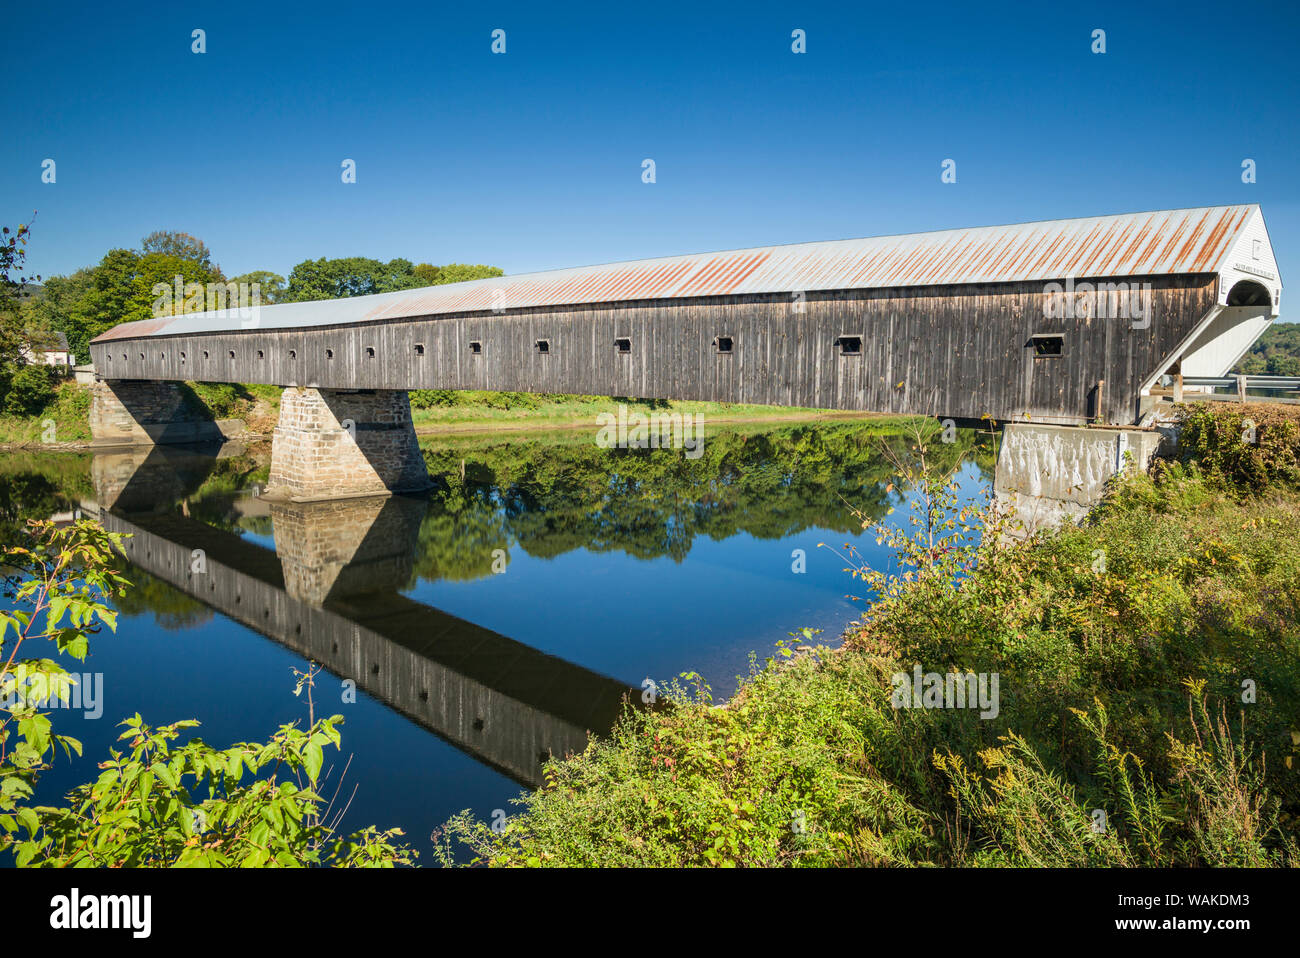 USA, New Hampshire, Cornish. Covered bridge Stock Photo